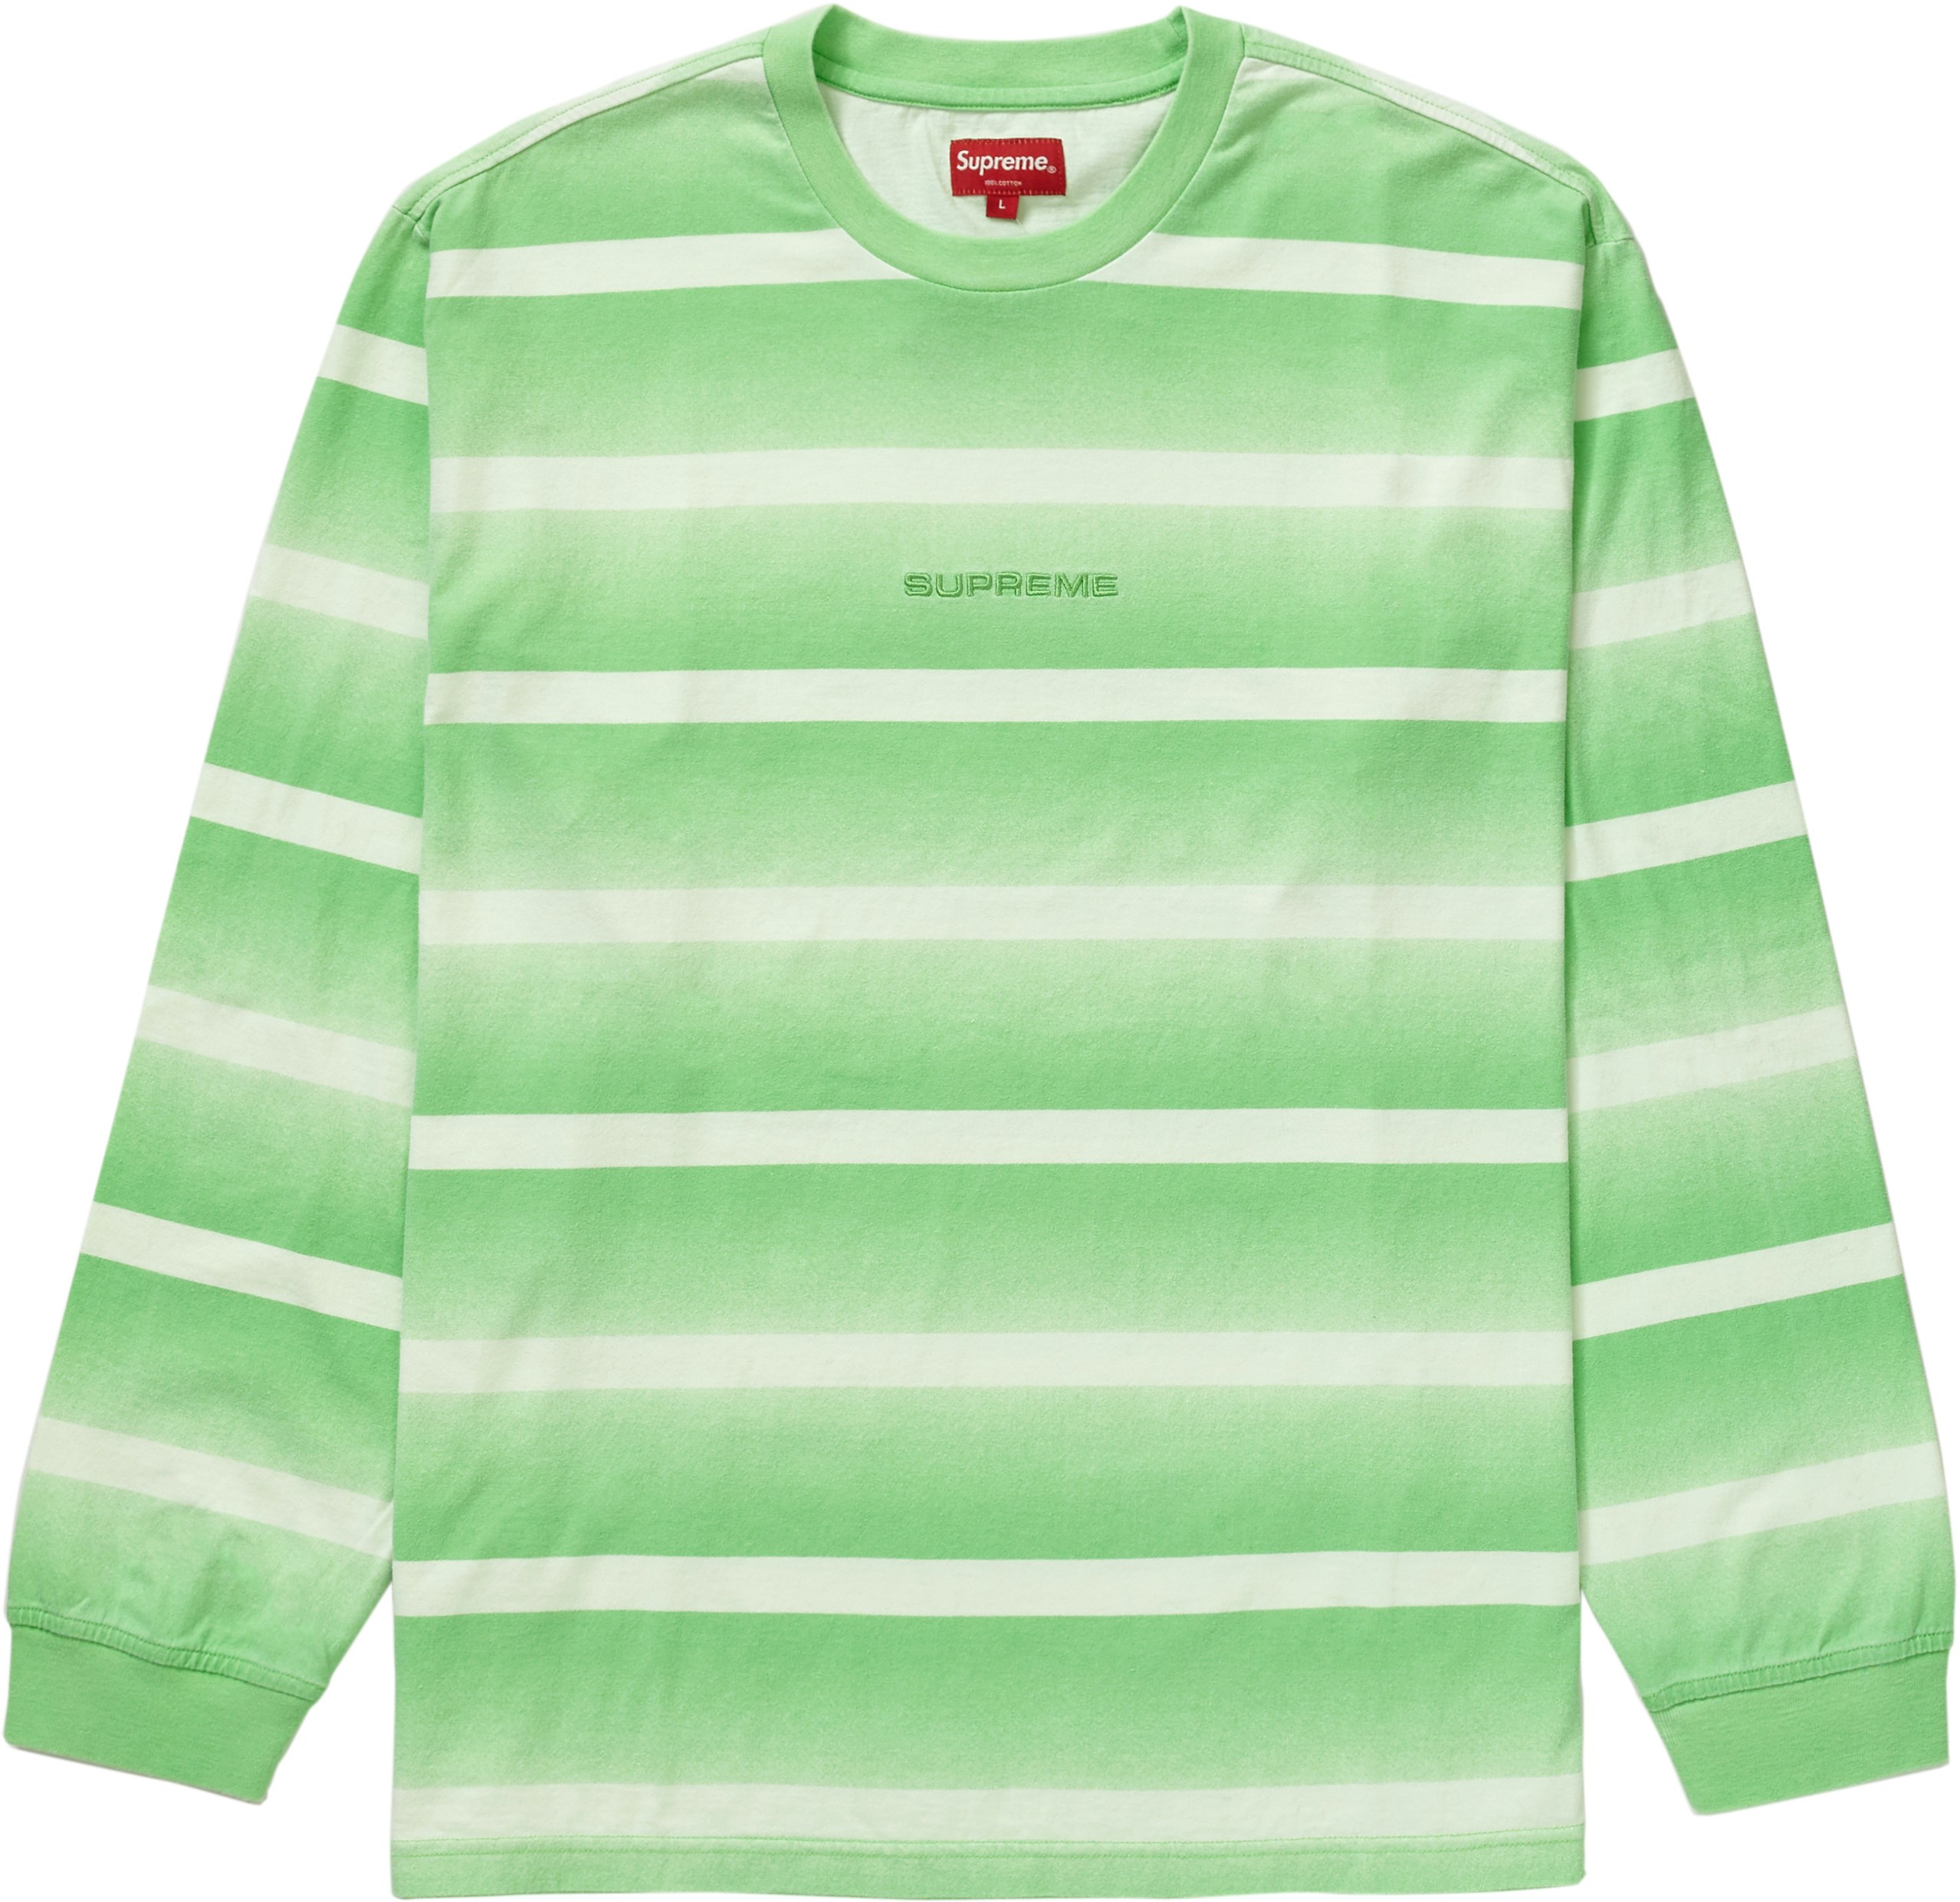 Supreme Fade Stripe L/S Top Bright Green - Novelship